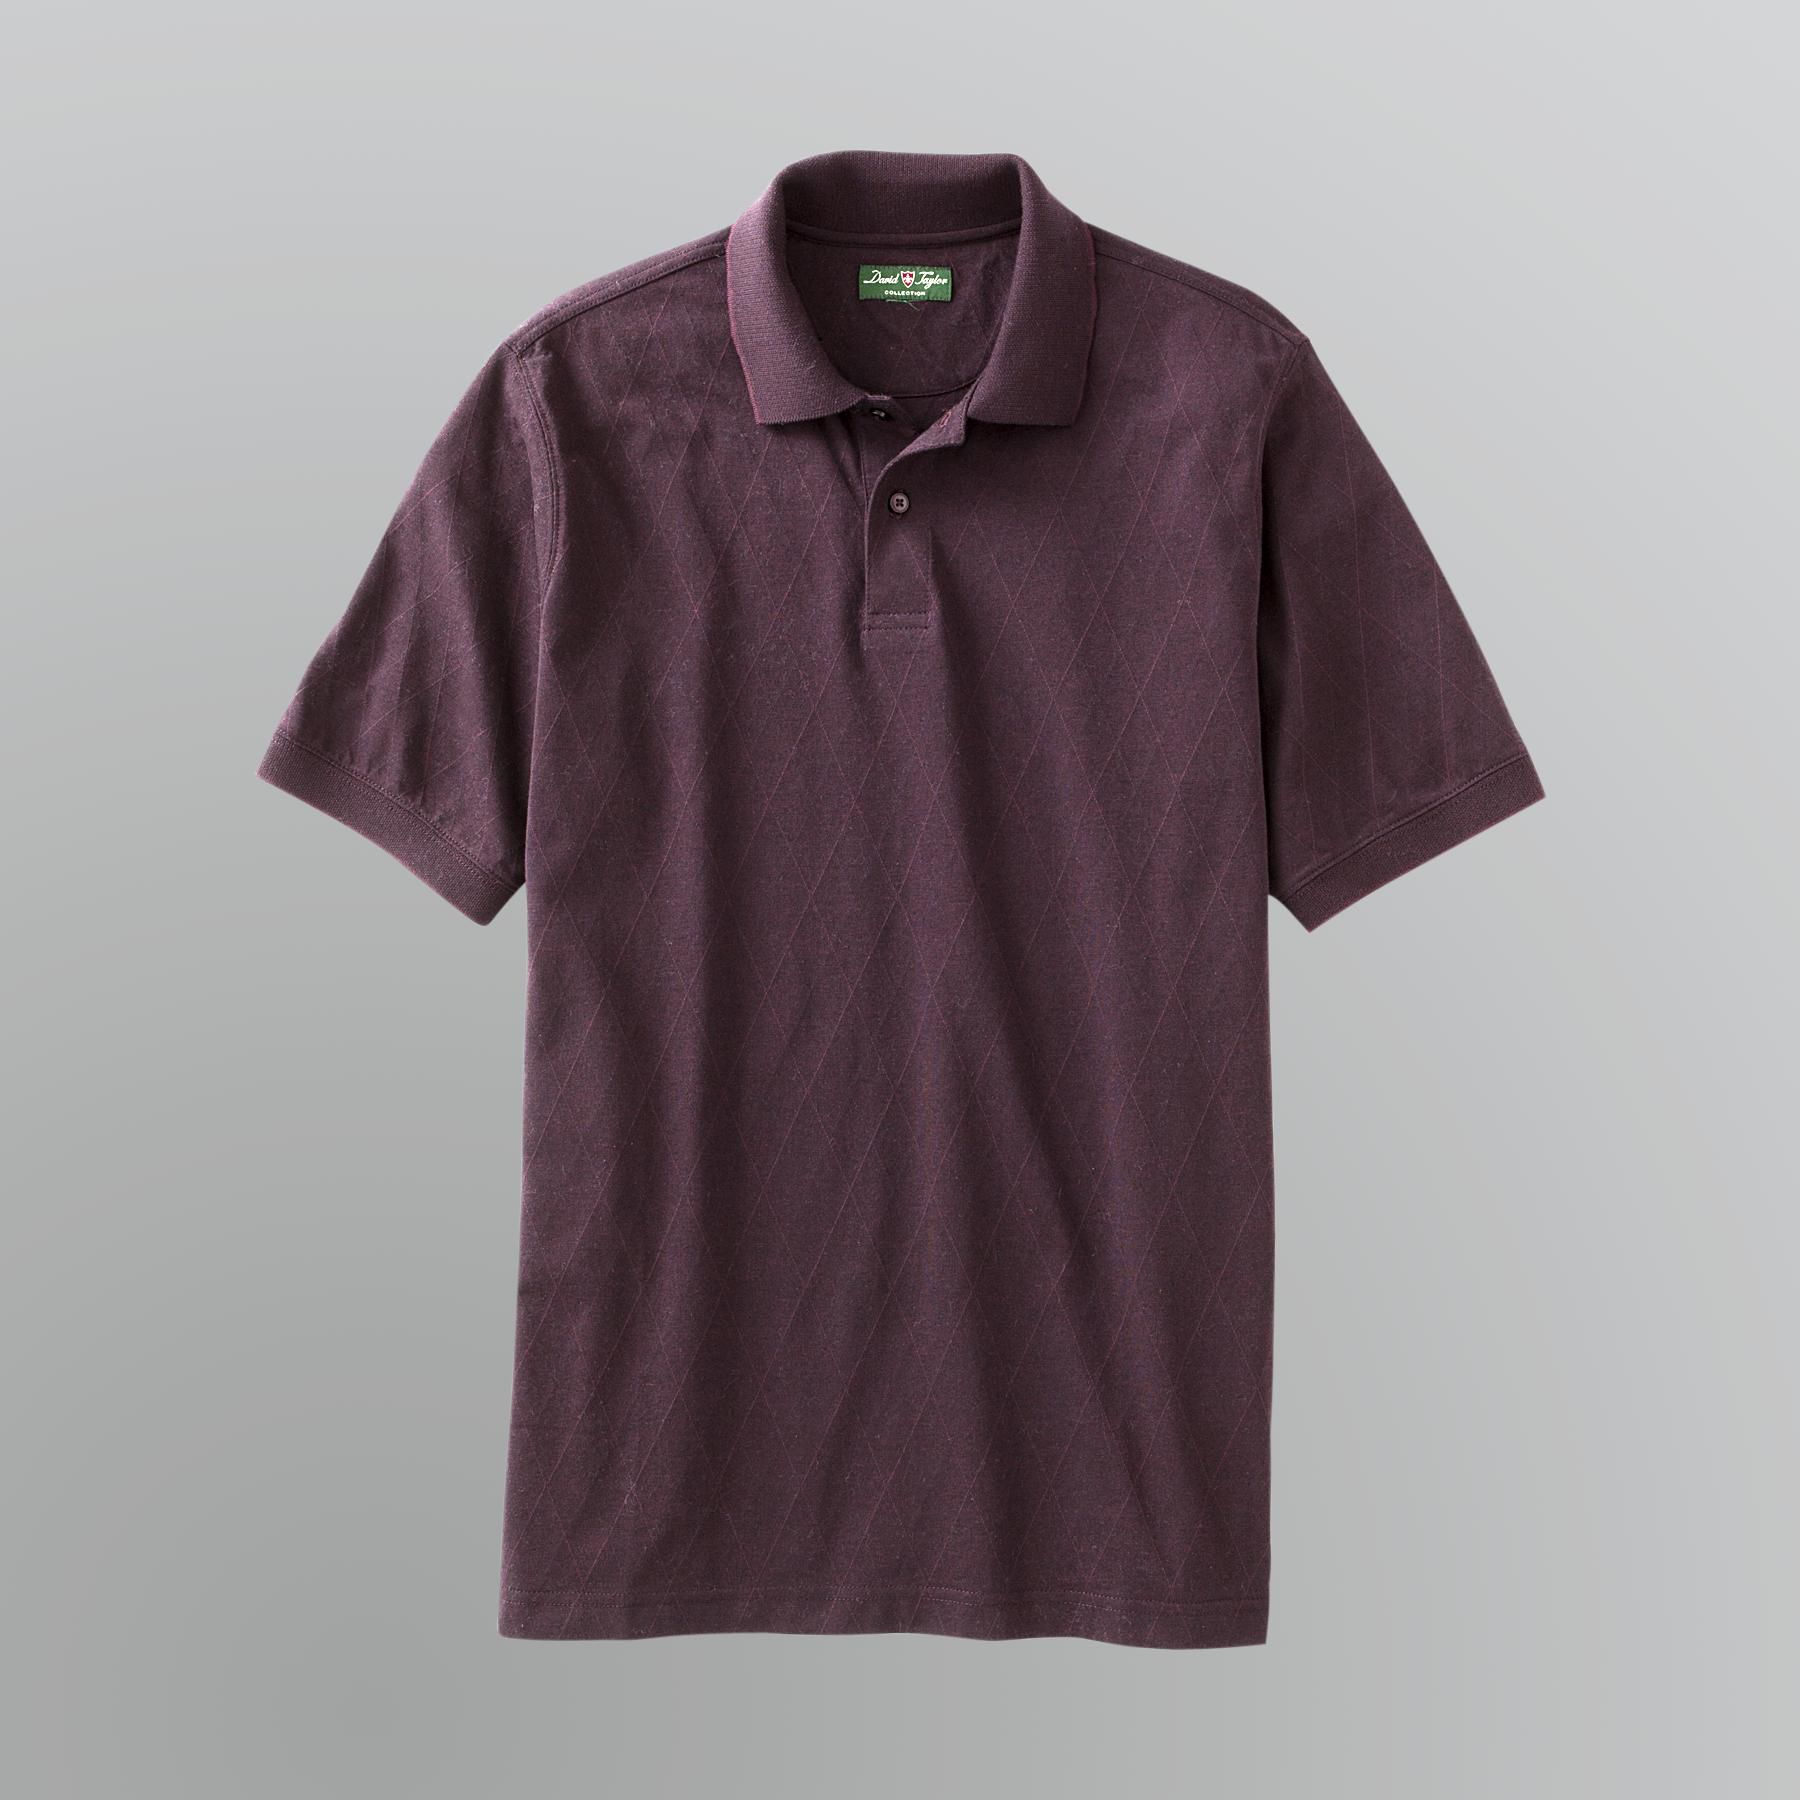 David Taylor Collection Men's Jacquard Polo Shirt